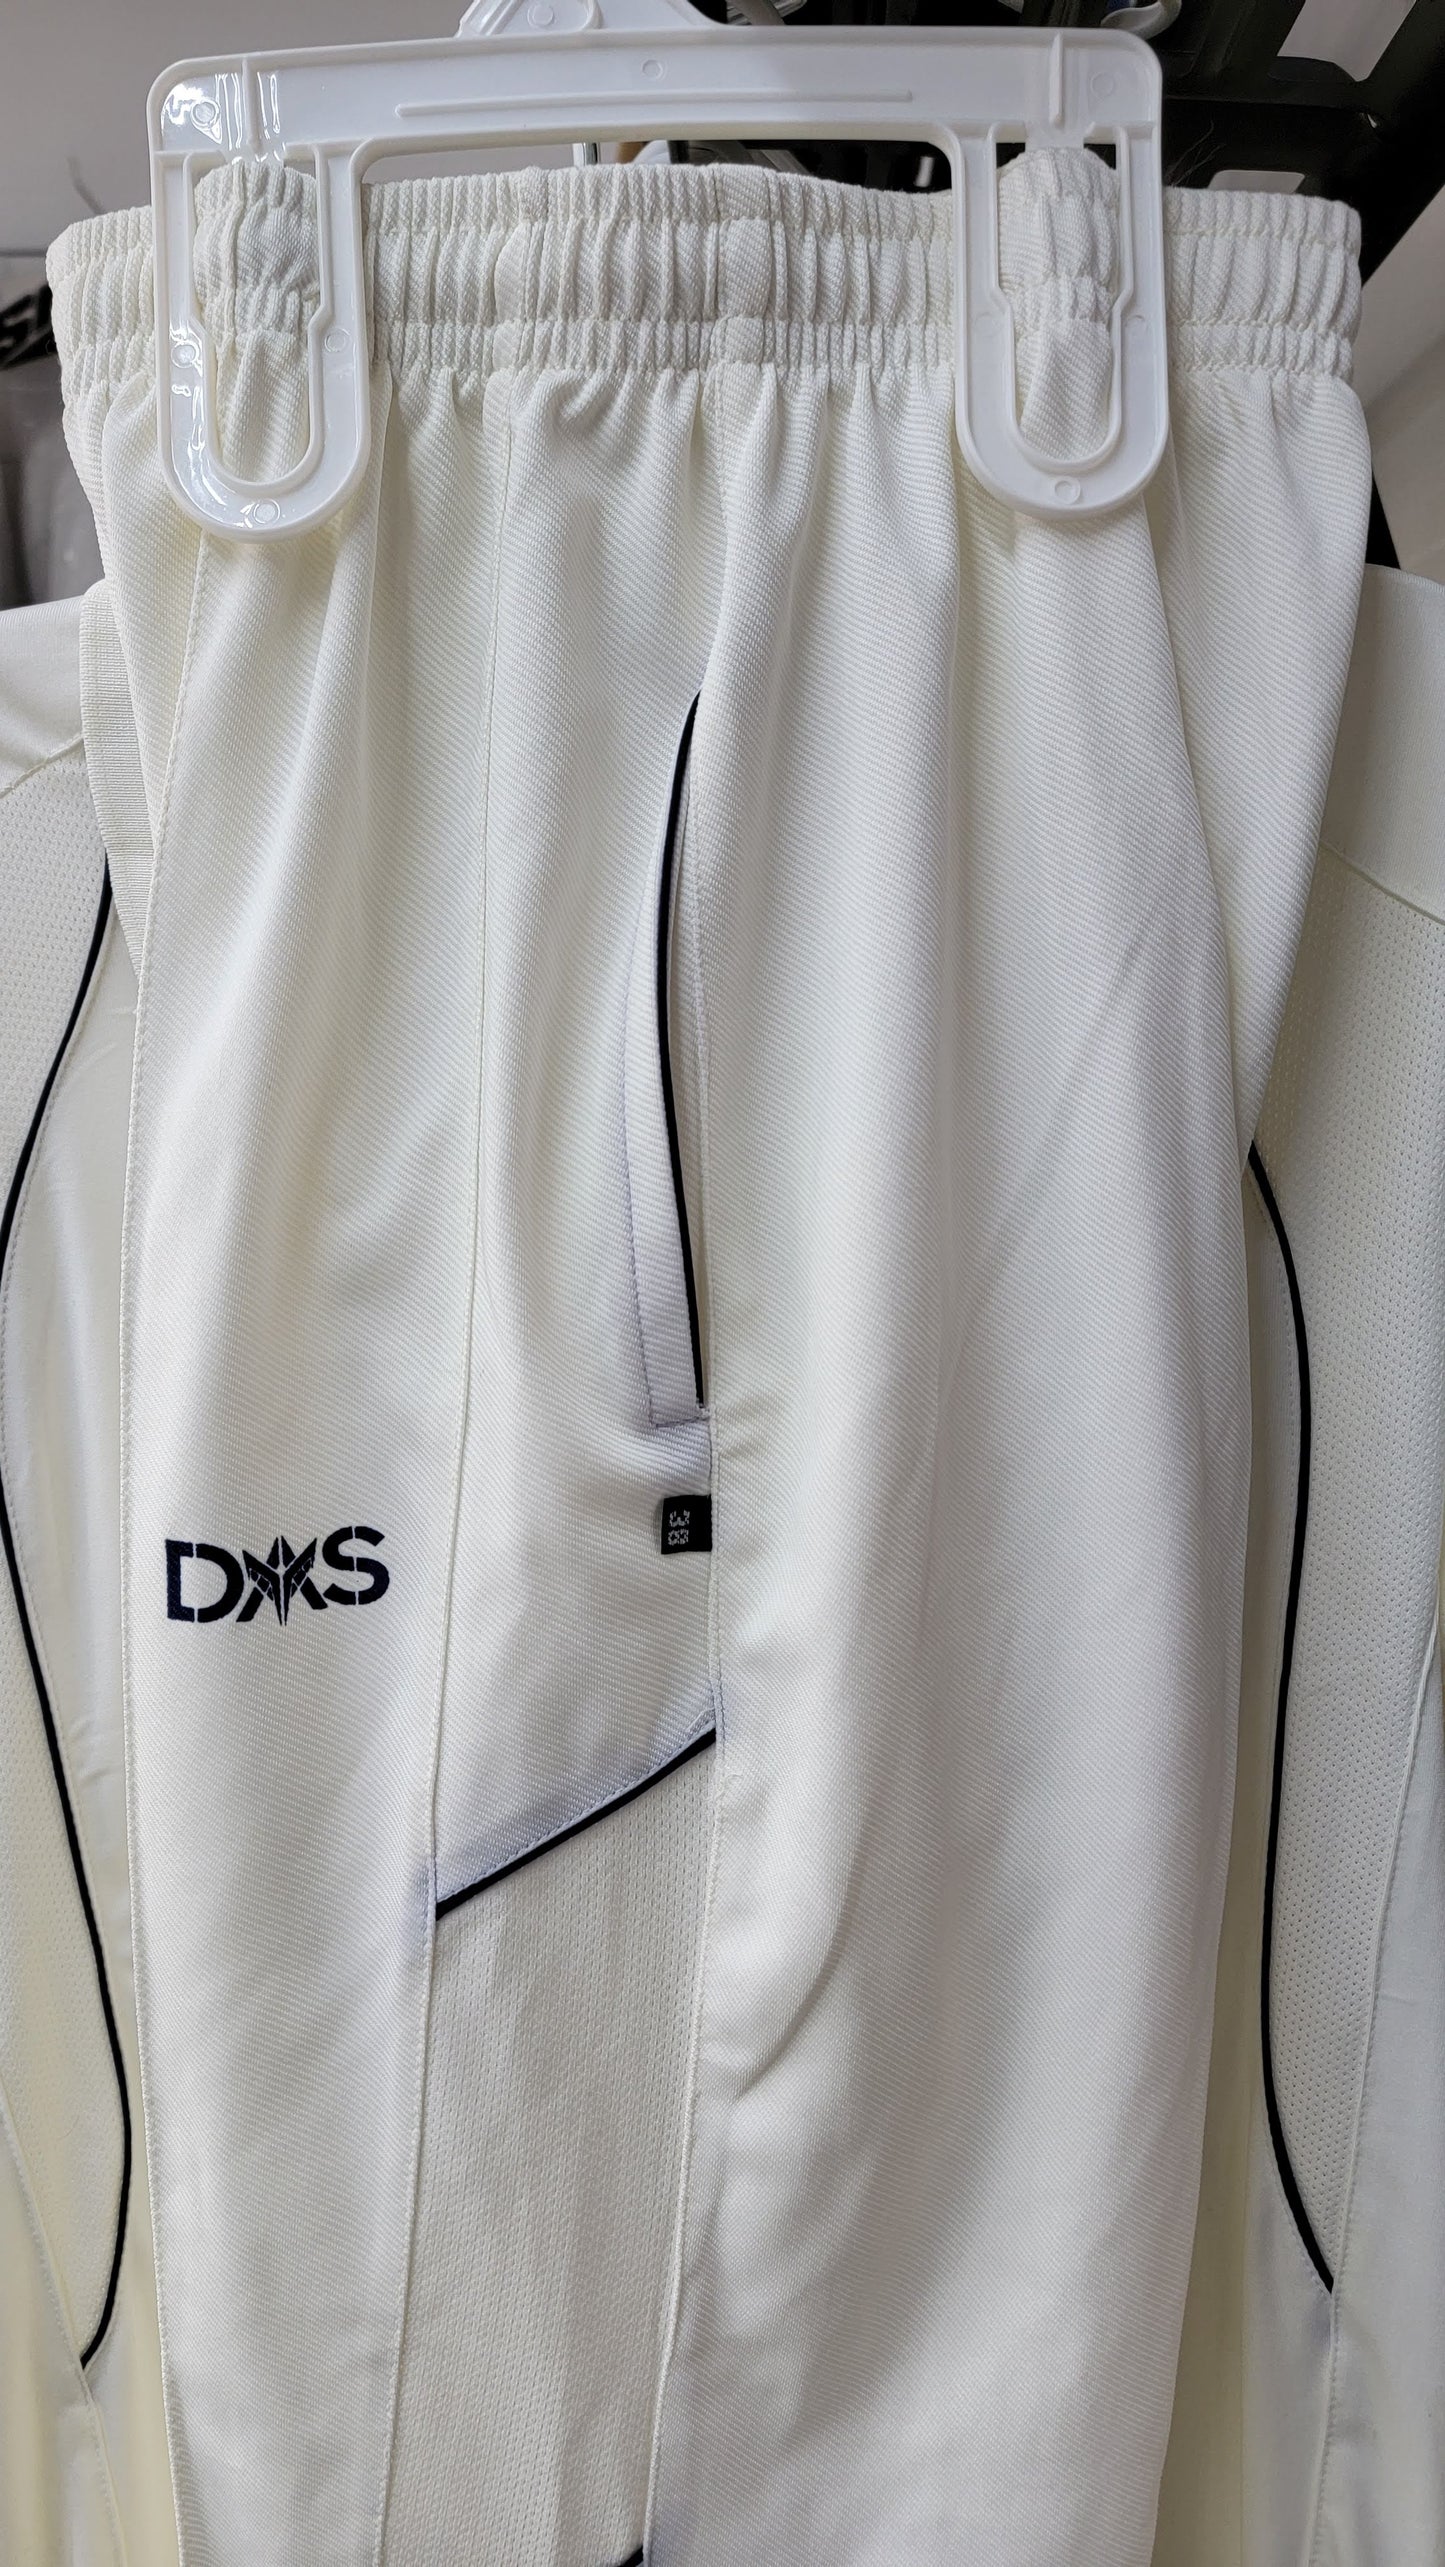 DAS Cricket White/cream Pants